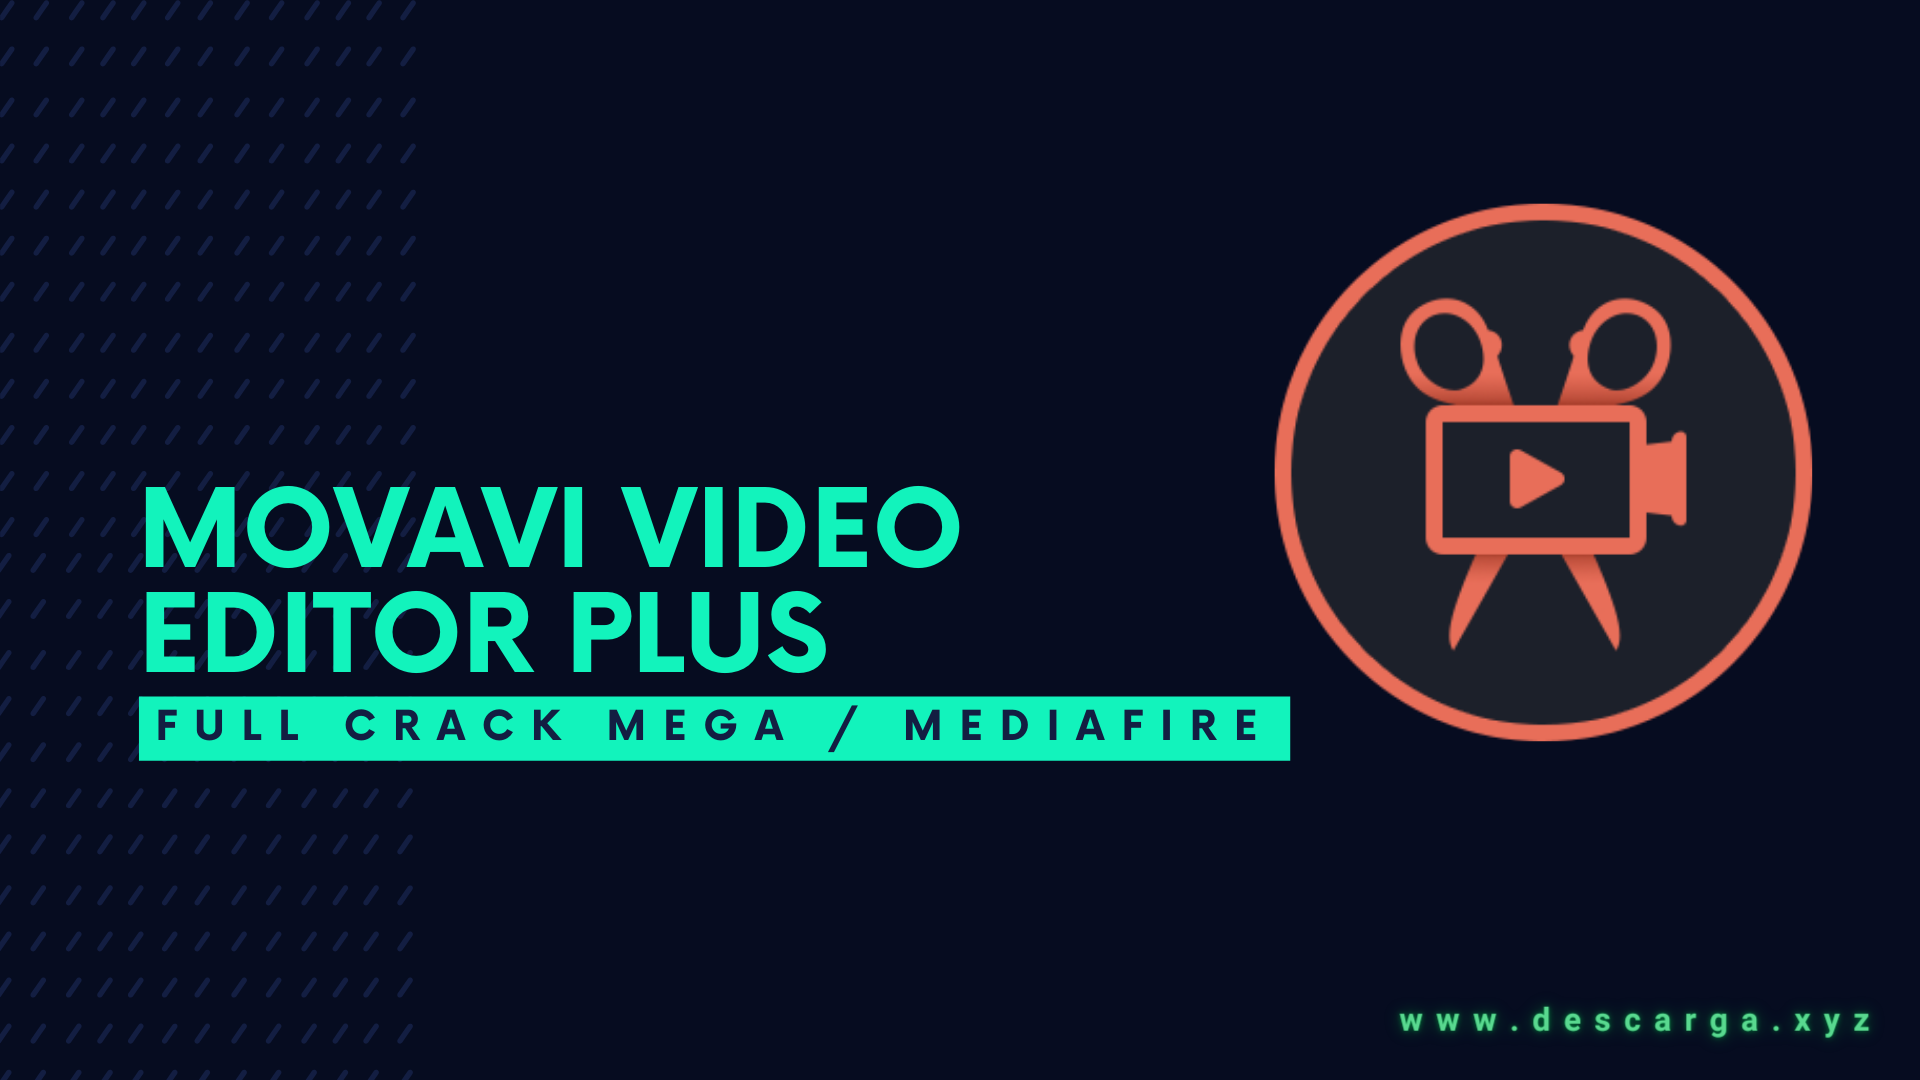 Download 🥇 Movavi Video Editor Plus FULL! v22.4.1 [CRACK] ✅ MEGA